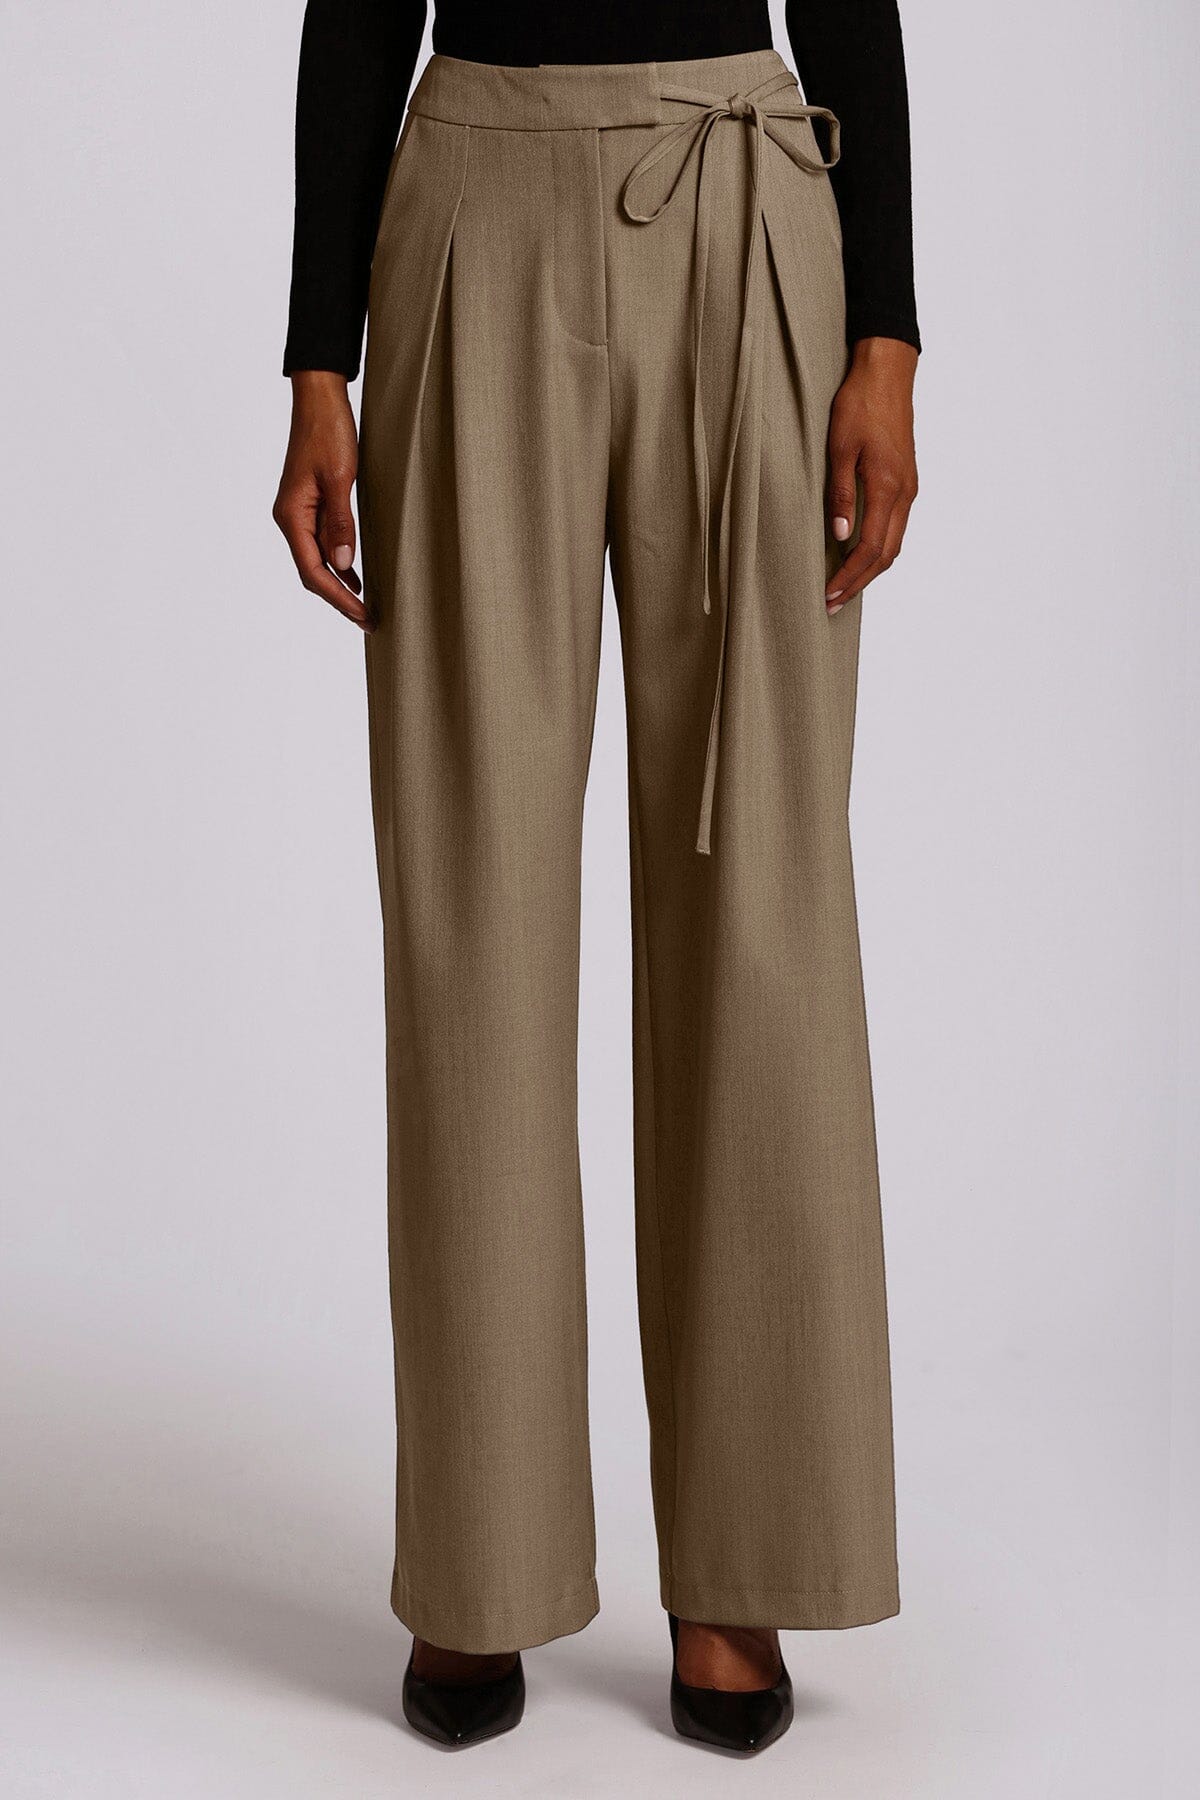 taupe brown wide leg tie belt trouser pants women's figure flattering office to date night bottoms